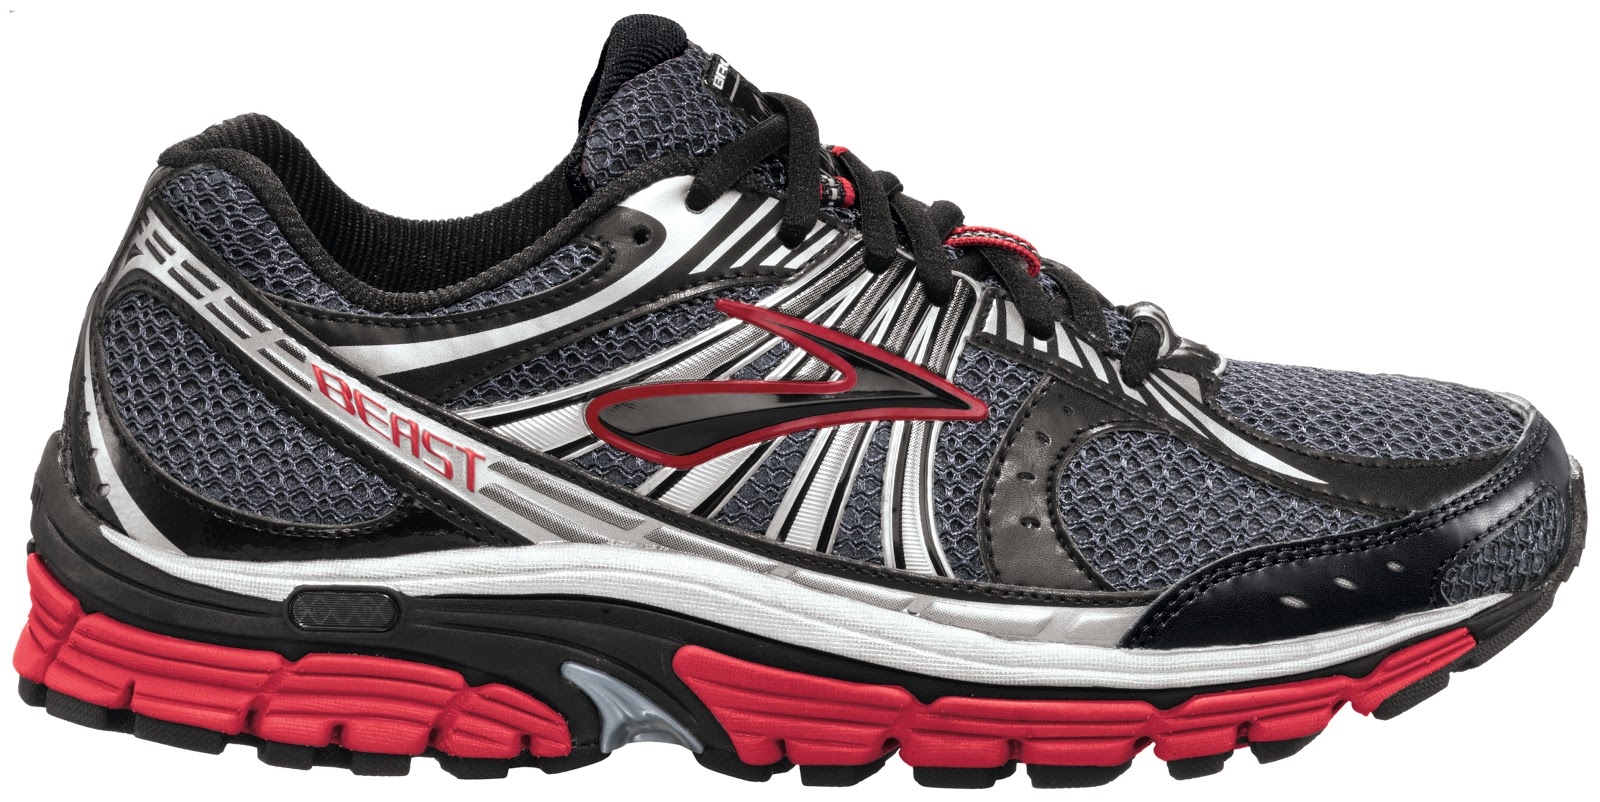 The Running Shoe Guru: April 2013